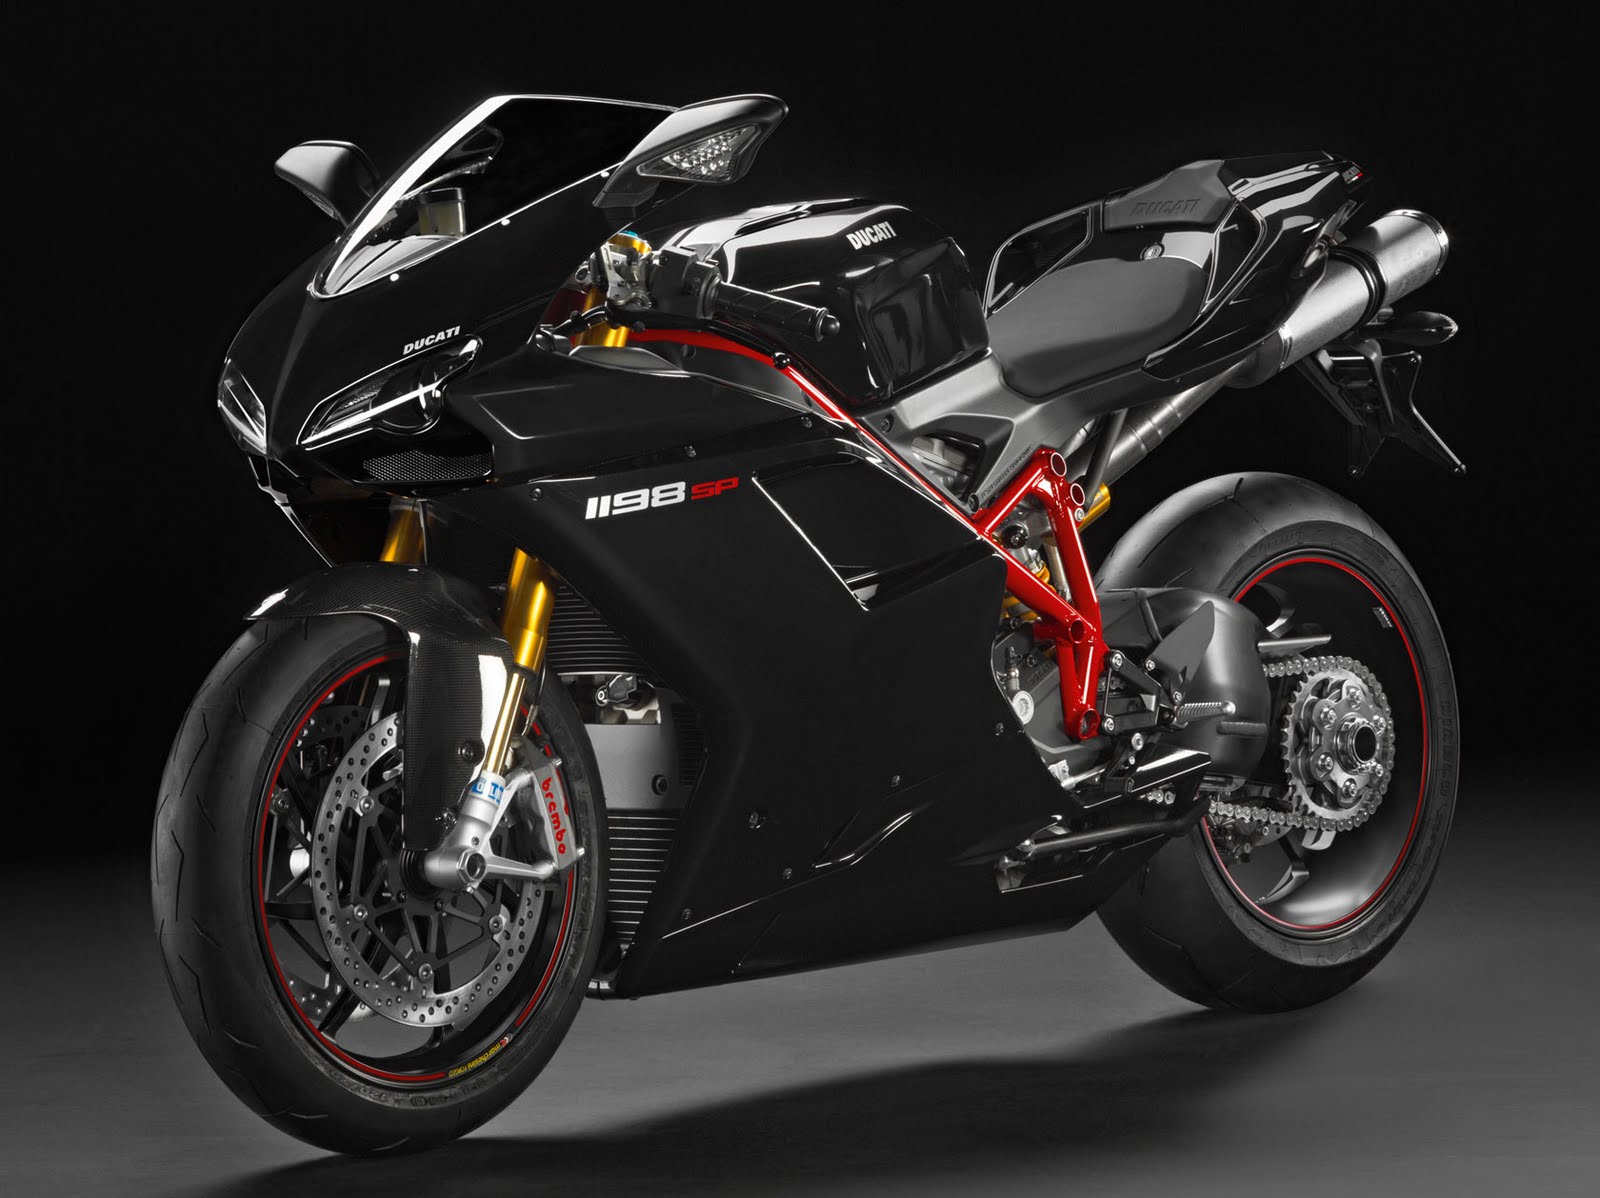 Ducati Superbike Black Color In Room Wallpaper Desktop Free High resolution